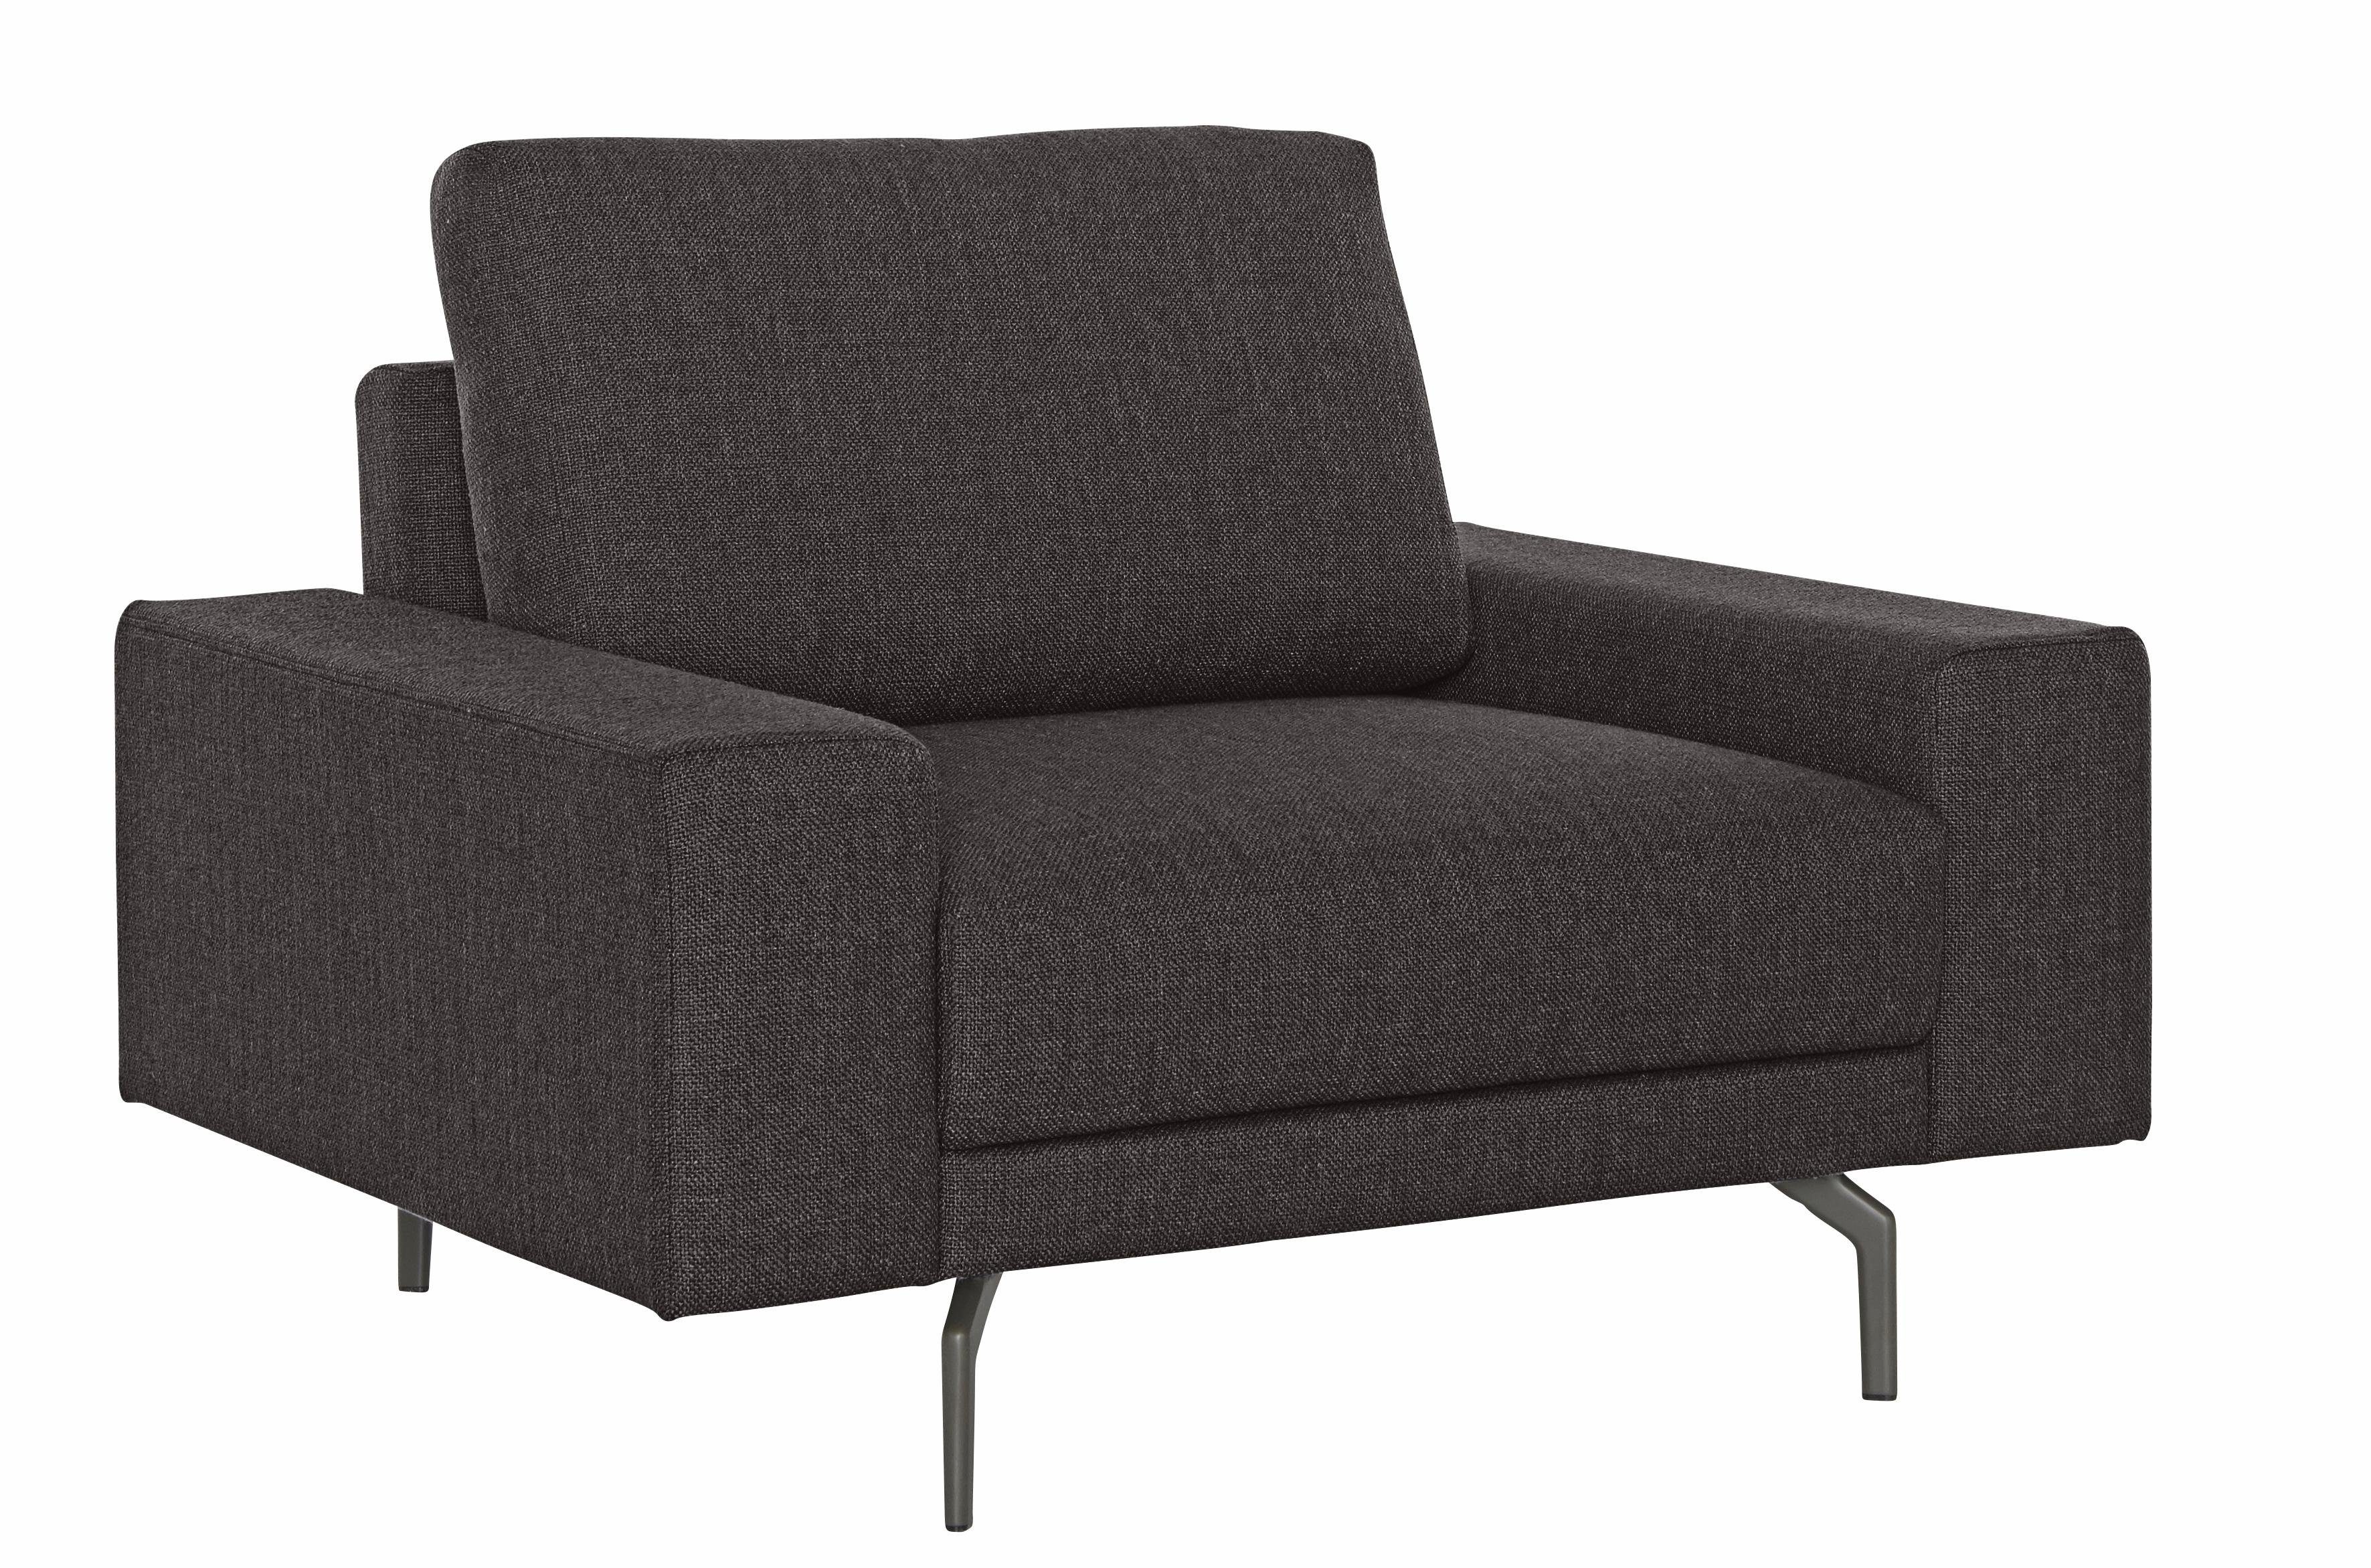 Alugussfüße Breite 120 in cm niedrig, sofa umbragrau, hülsta Armlehne breit hs.450, Sessel